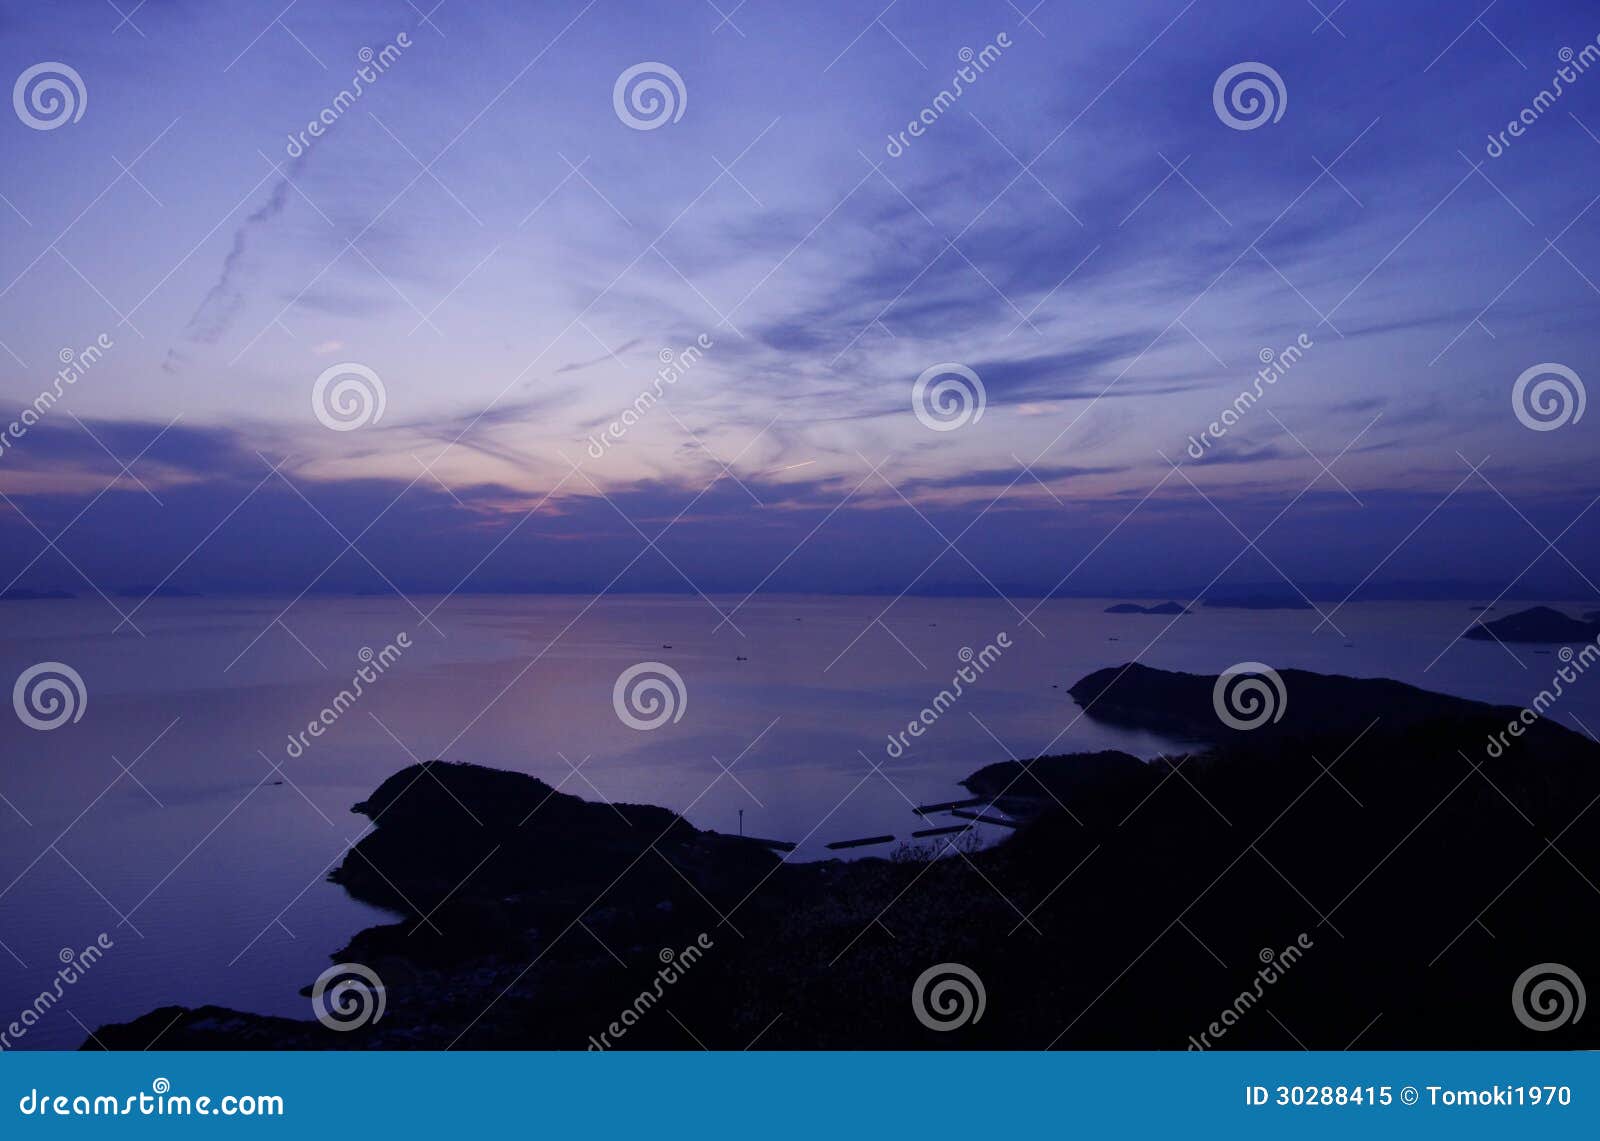 seto inland sea in the evening